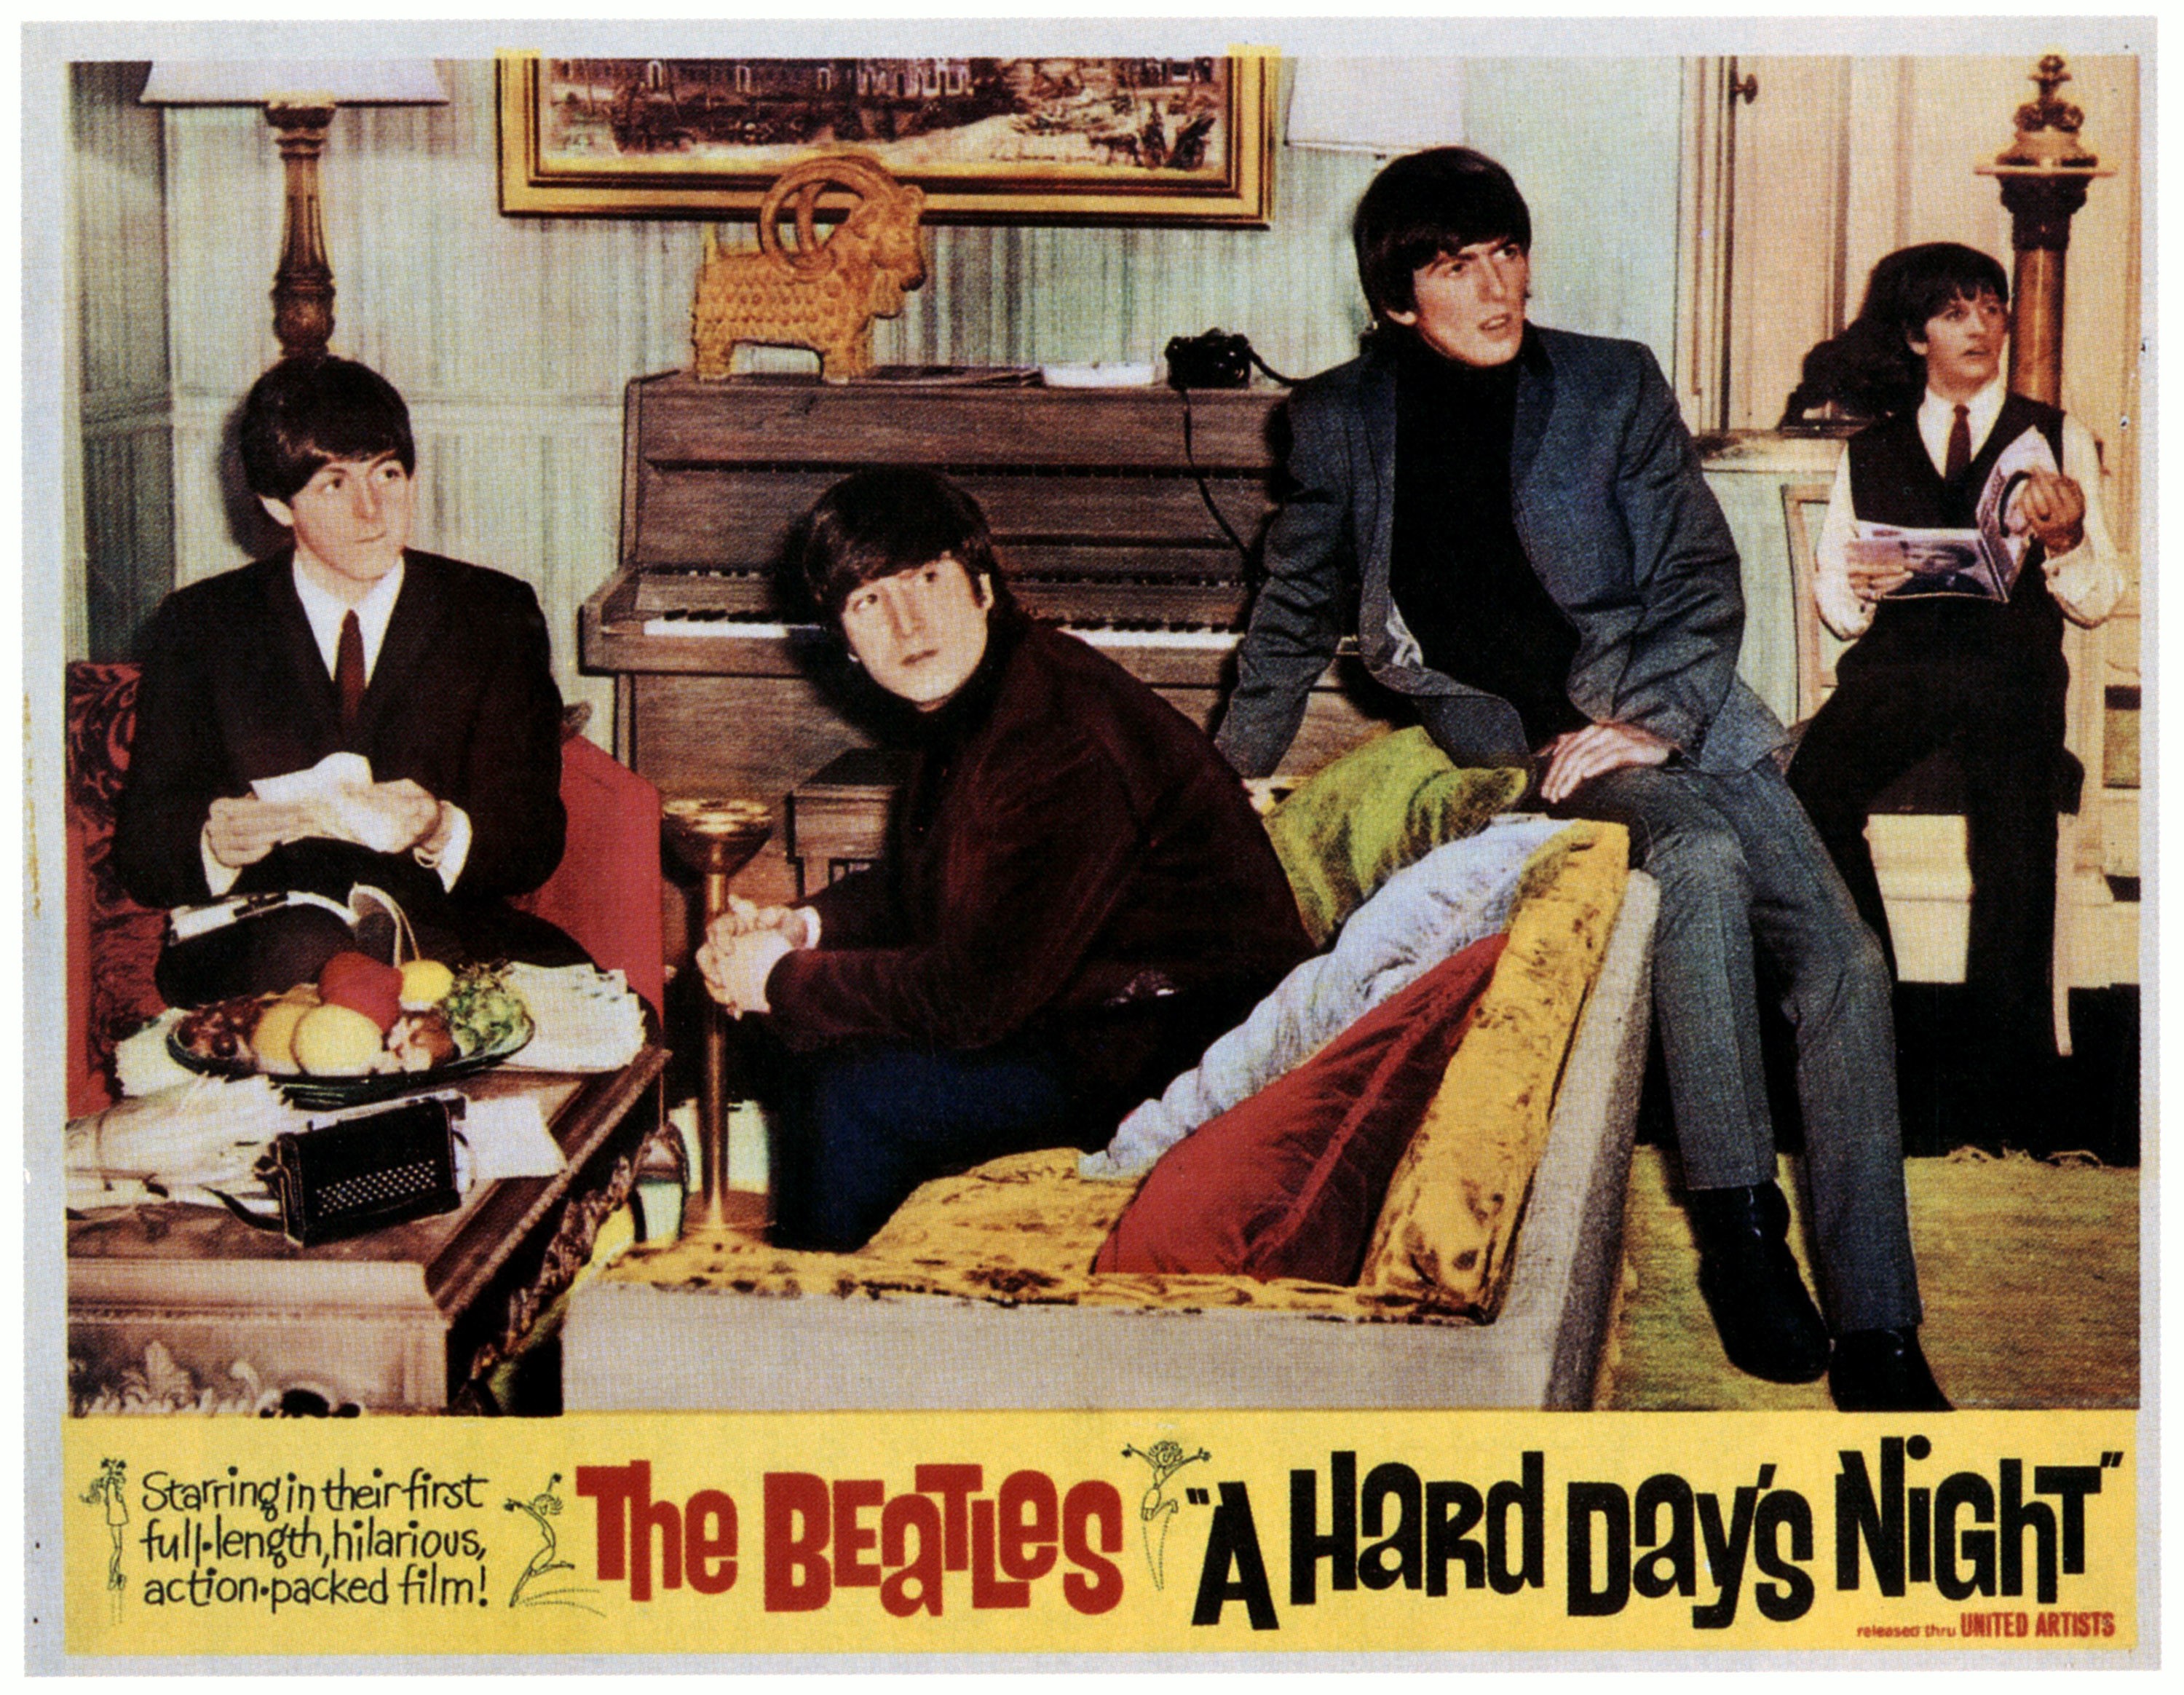 The Beatles (Paul McCartney, John Lennon, George Harrison, Ringo Starr) in 'A Hard Day's Night' released in 1964